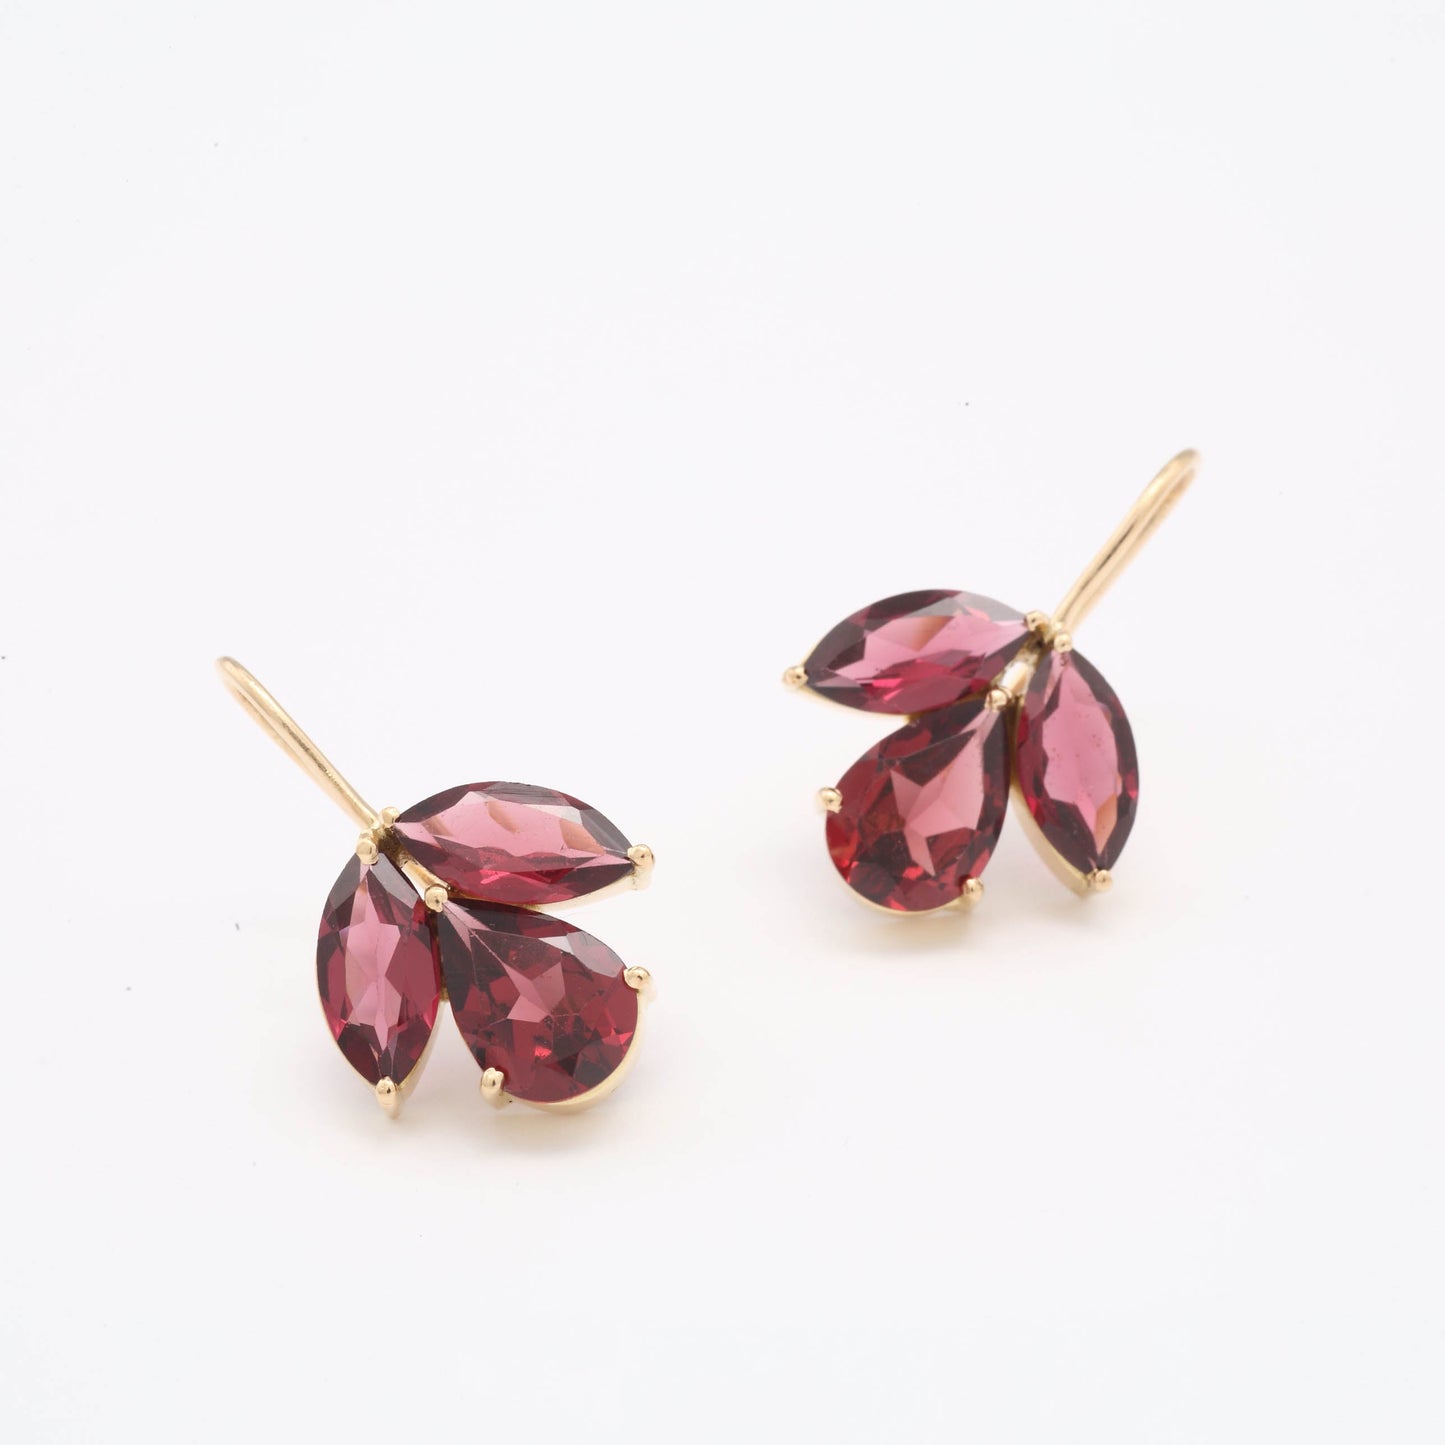 The Mentia Gold and Garnet Hook Earrings by Rasvihar